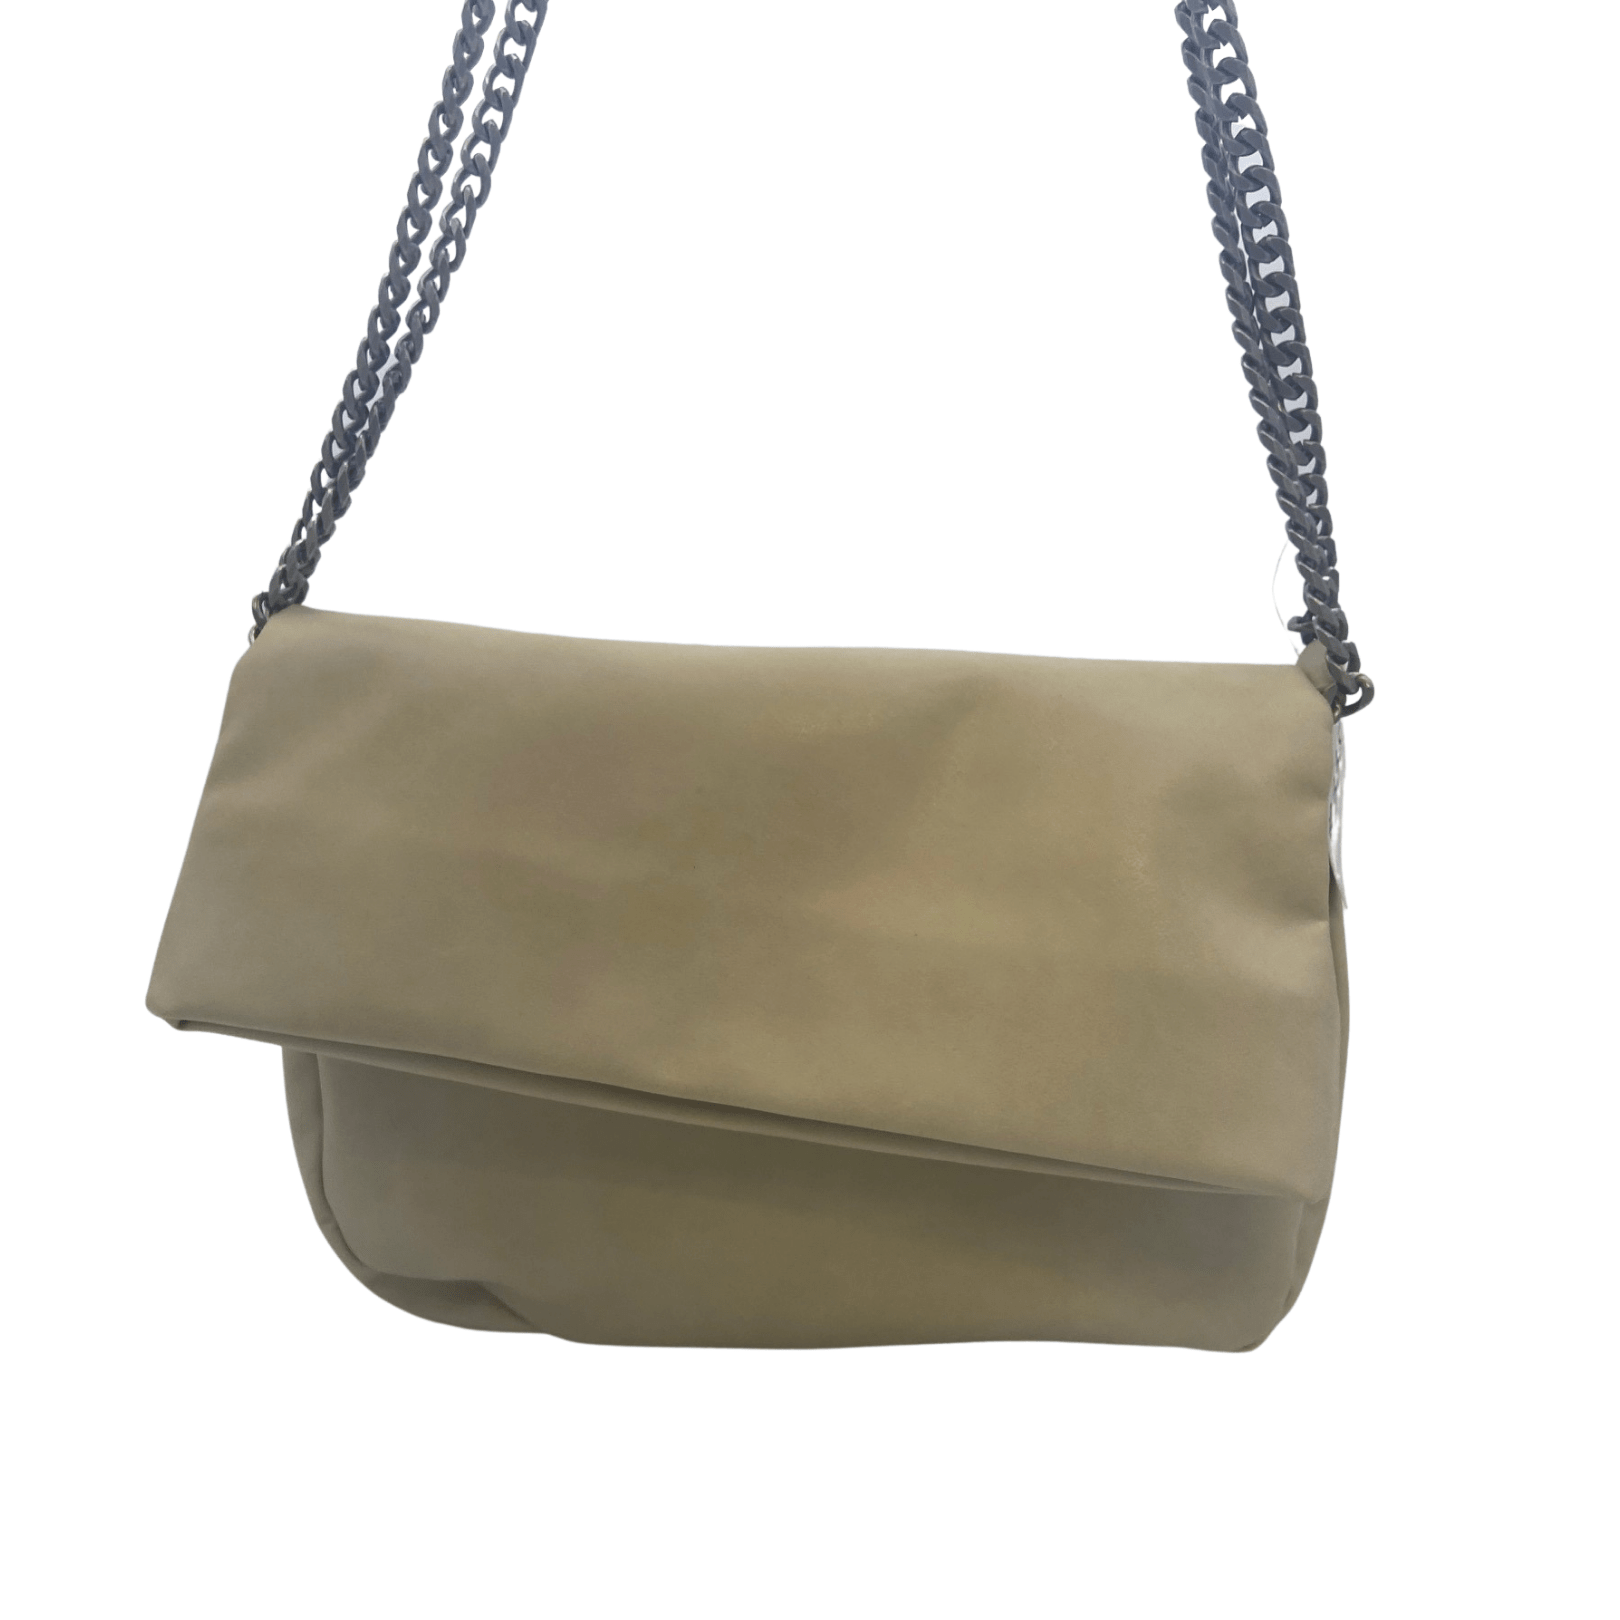 VEGGANI Maya Mini Shoulder Bag - Cream New w/out Tags